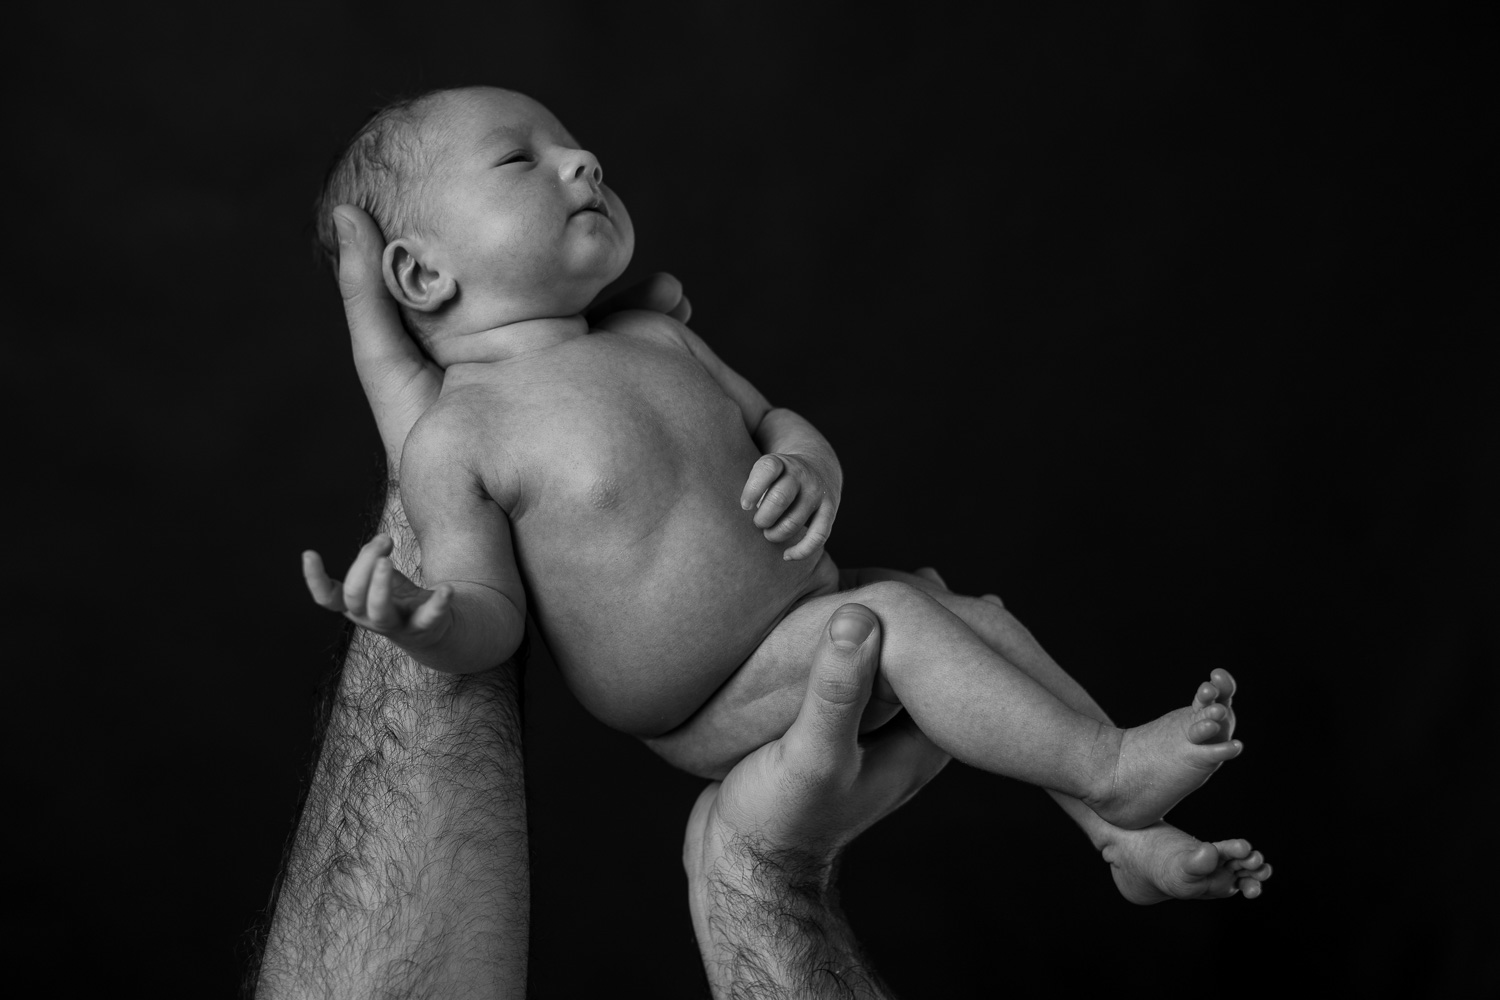 Photograph of a newborn baby on a black backdrop (Copy)